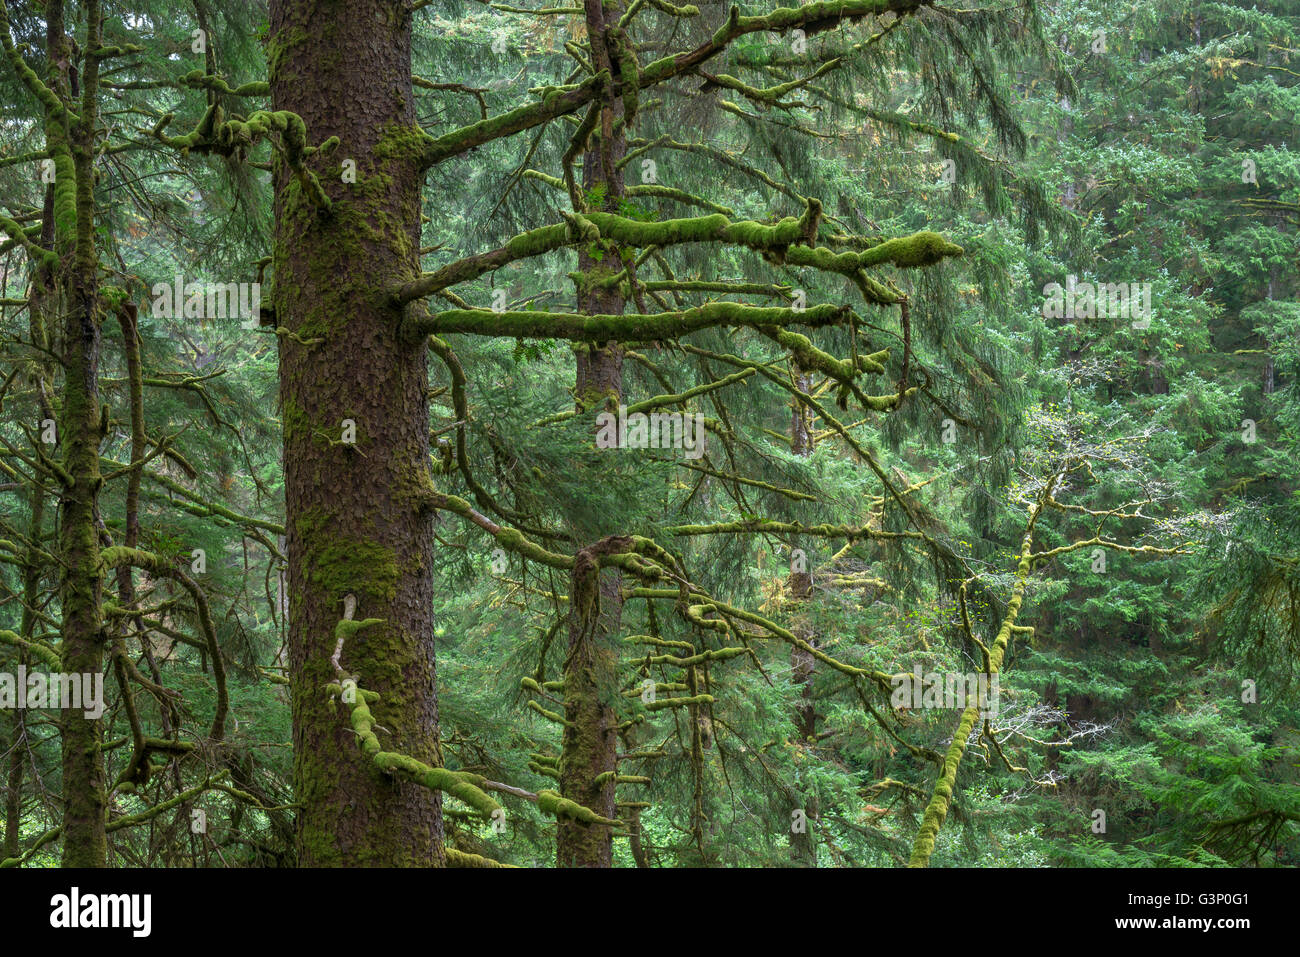 USA, Oregon, Siuslaw National Forest. Cape Perpetua Scenic Area, Old growth coastal rainforest of Sitka spruce. Stock Photo